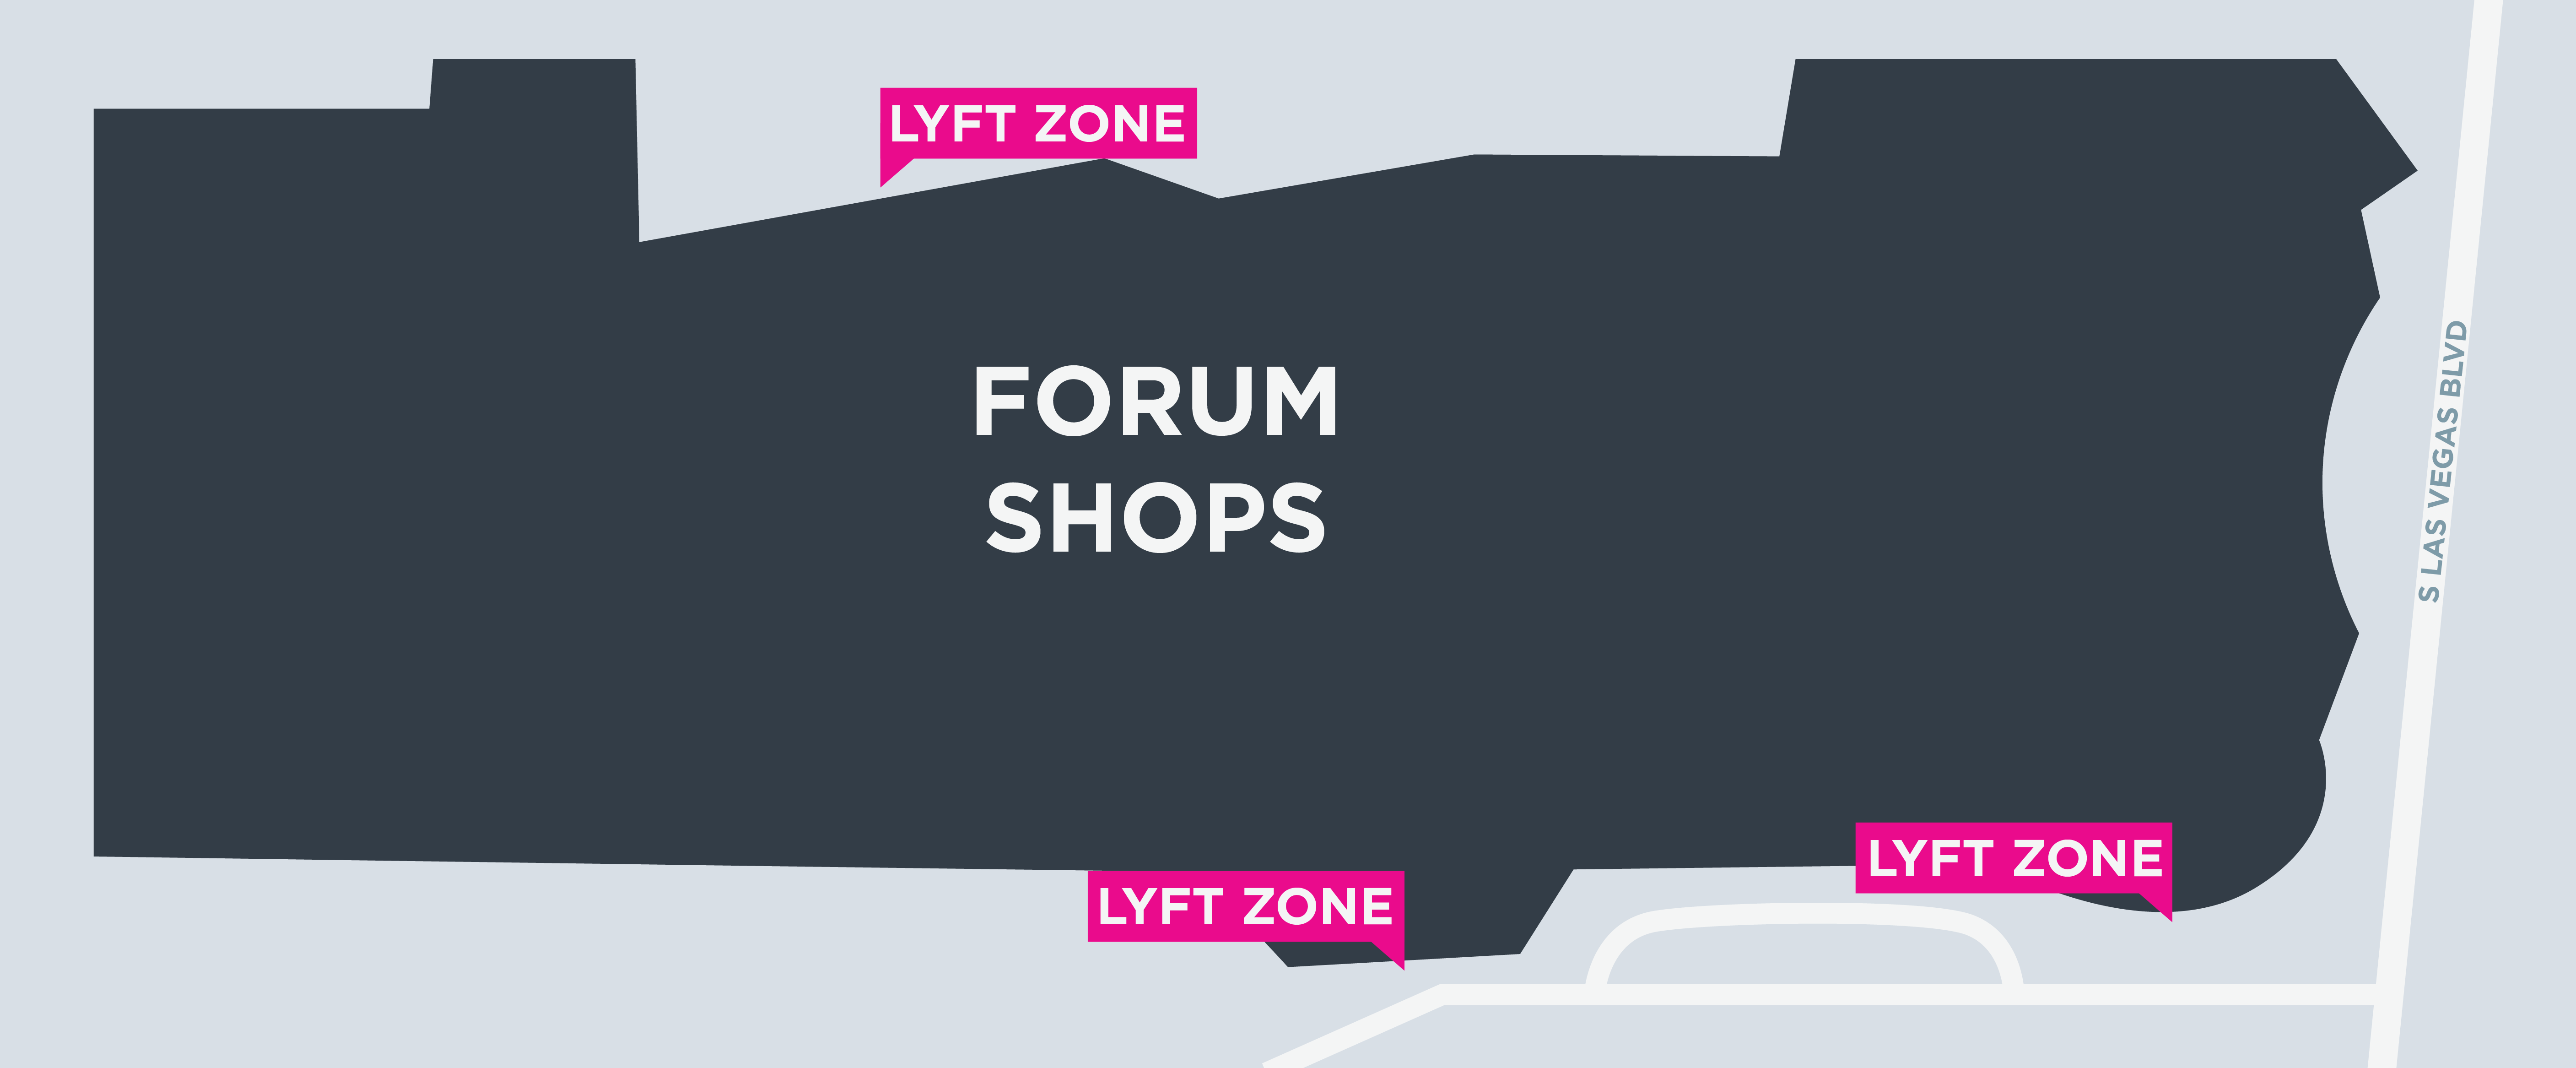 Mapa de las zonas de Lyft en Forum, en Las Vegas.